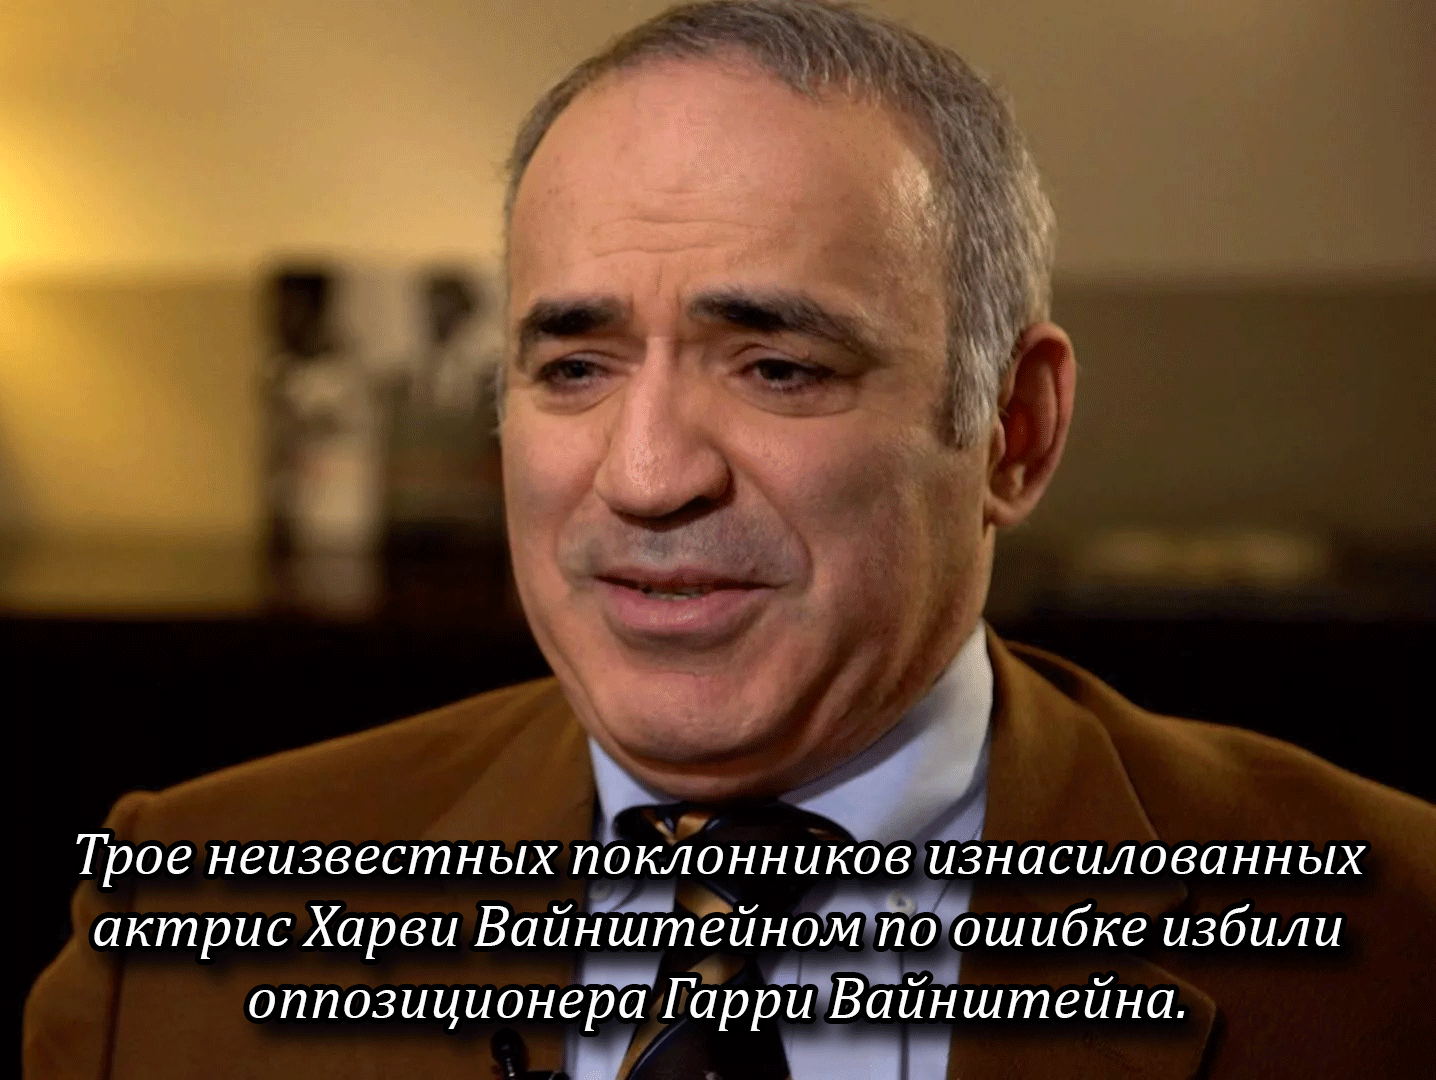 That very moment when... - My, Harvey Weinstein, Garry Kasparov, Hollywood, Scandal, Politics, Humor